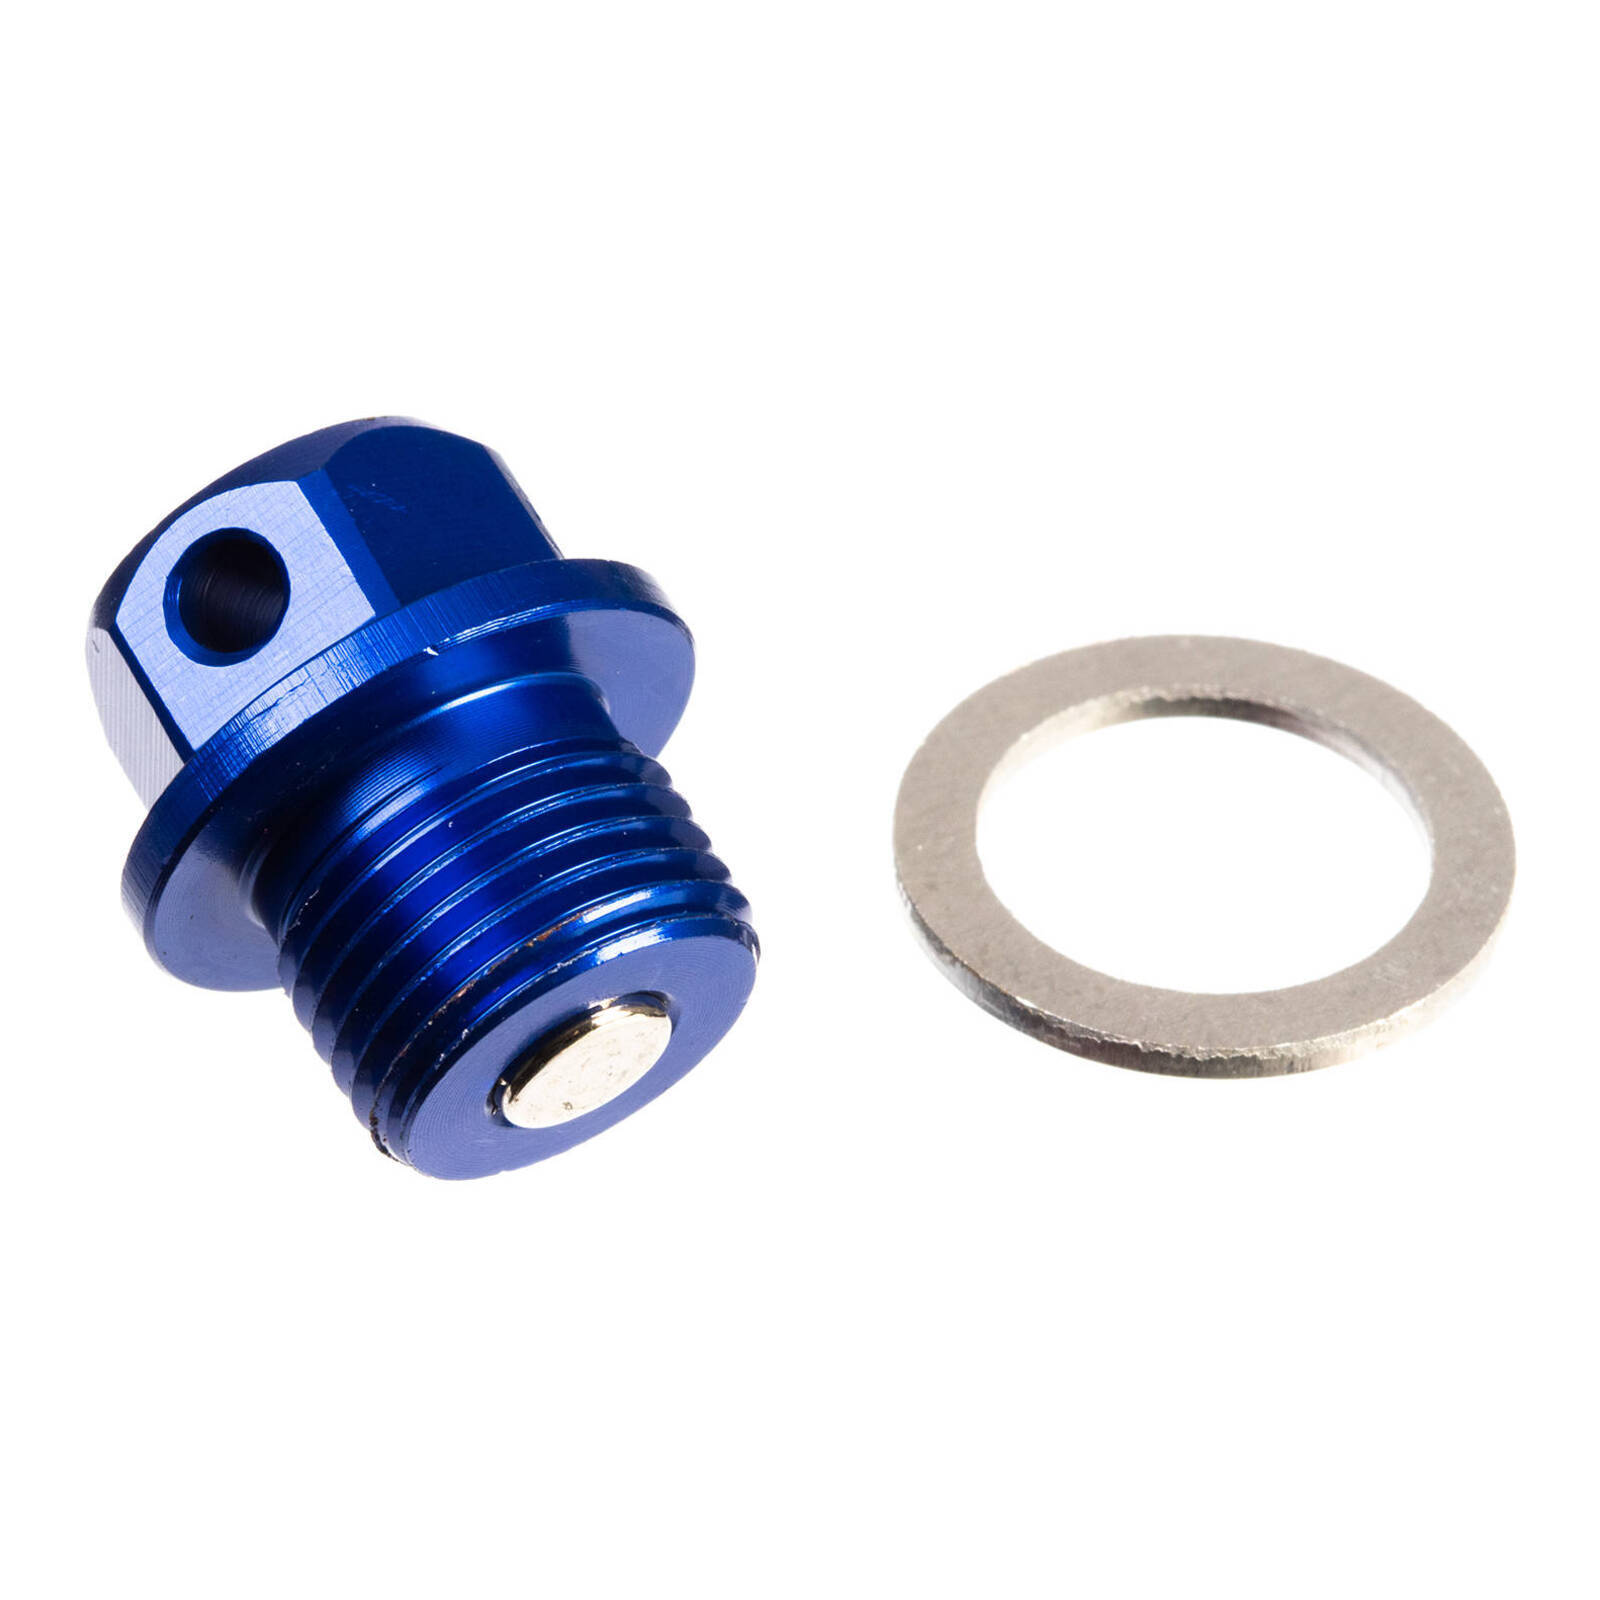 Whites Magnetic Sump Plug M14 x 10 x 1.25 - Blue